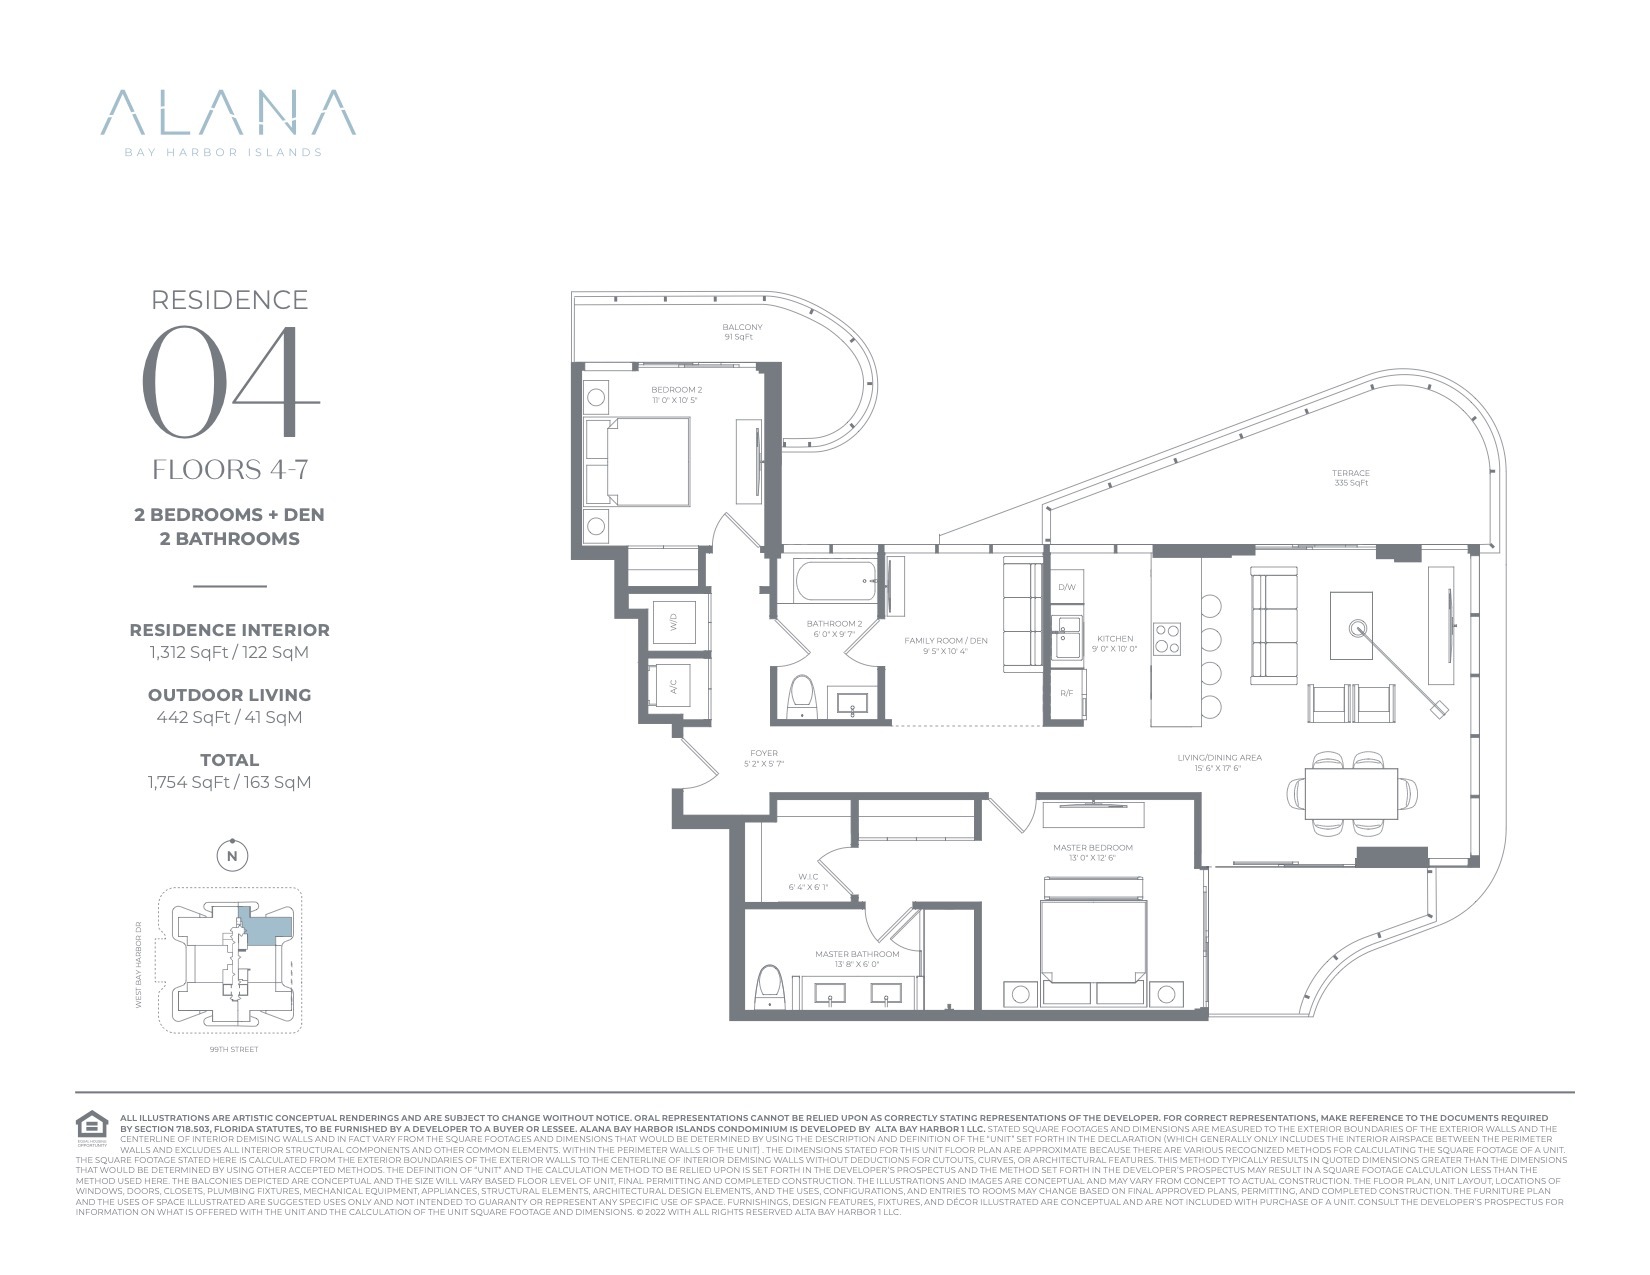 Floor Plan for Alana Bay Harbor Island Floorplans, Residence 04 Floors 4-7